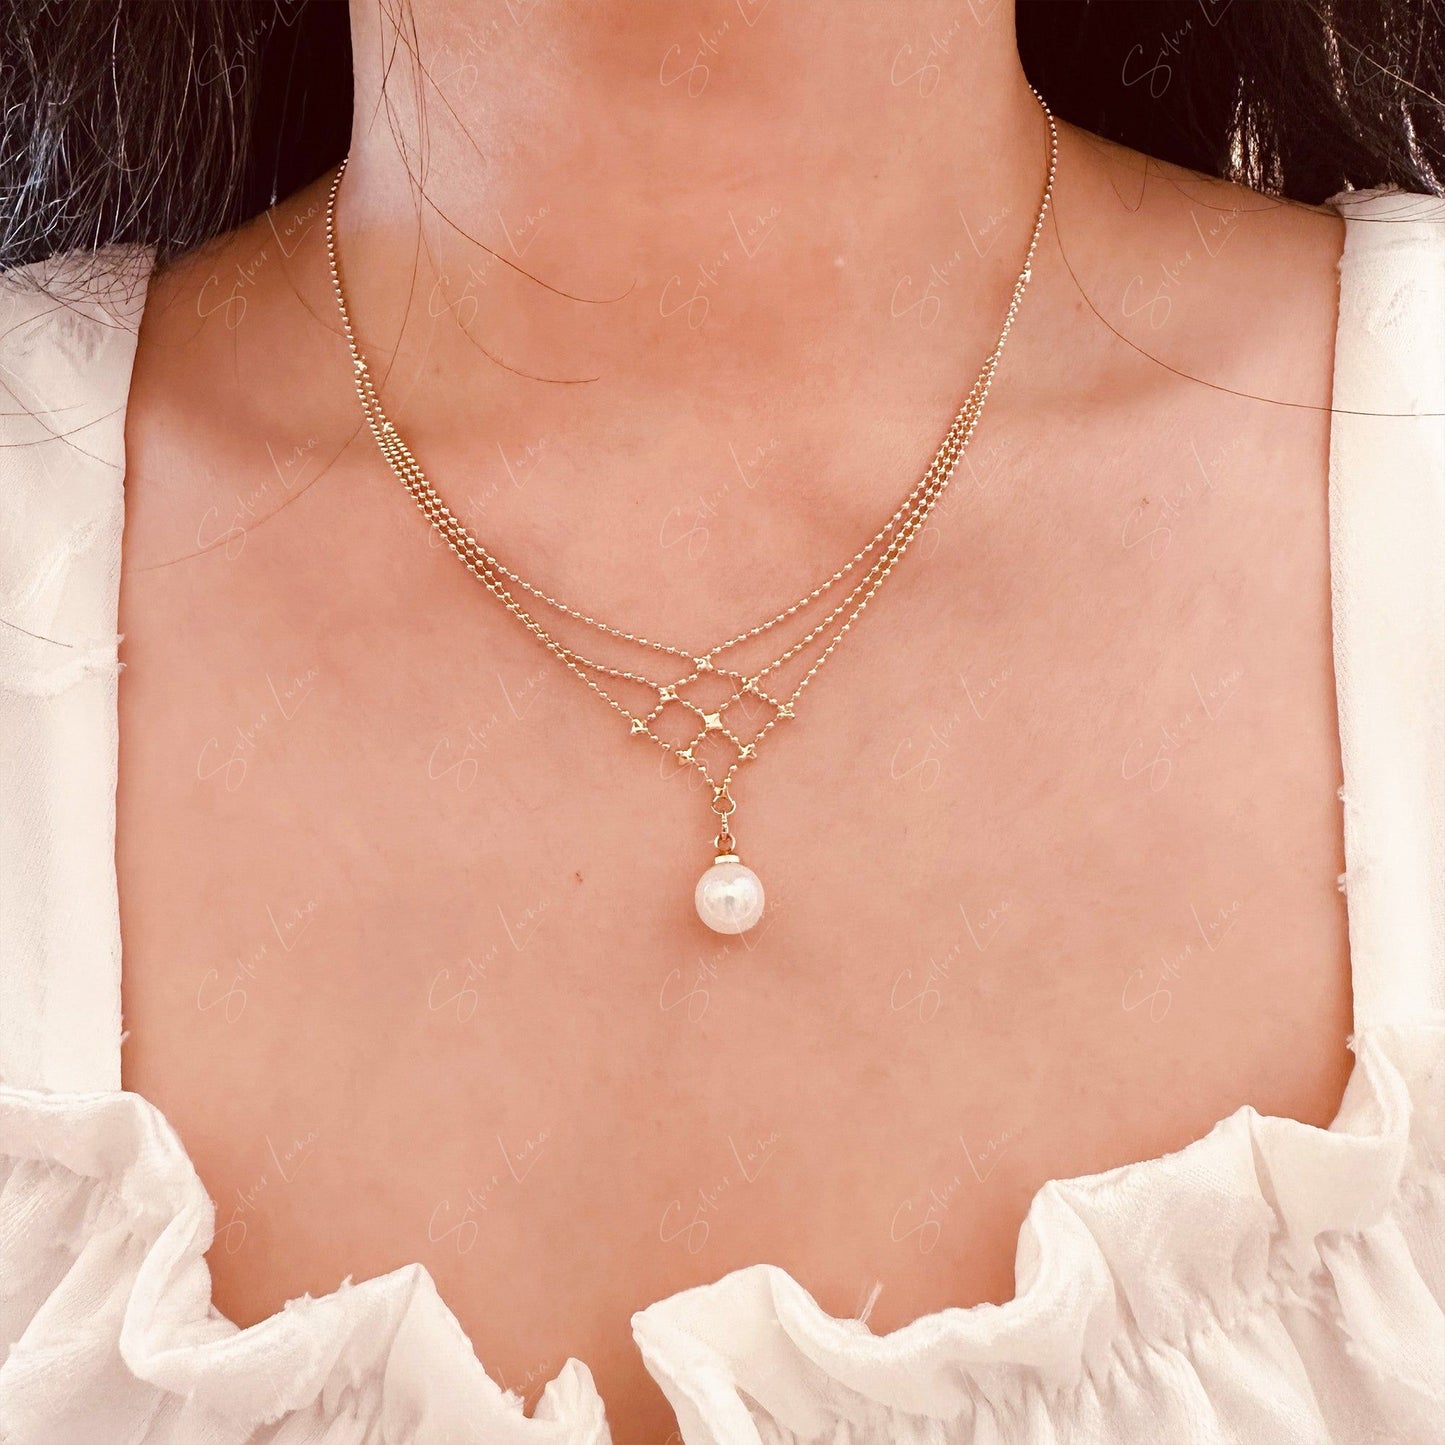 Elegant pearl drop pendant necklace